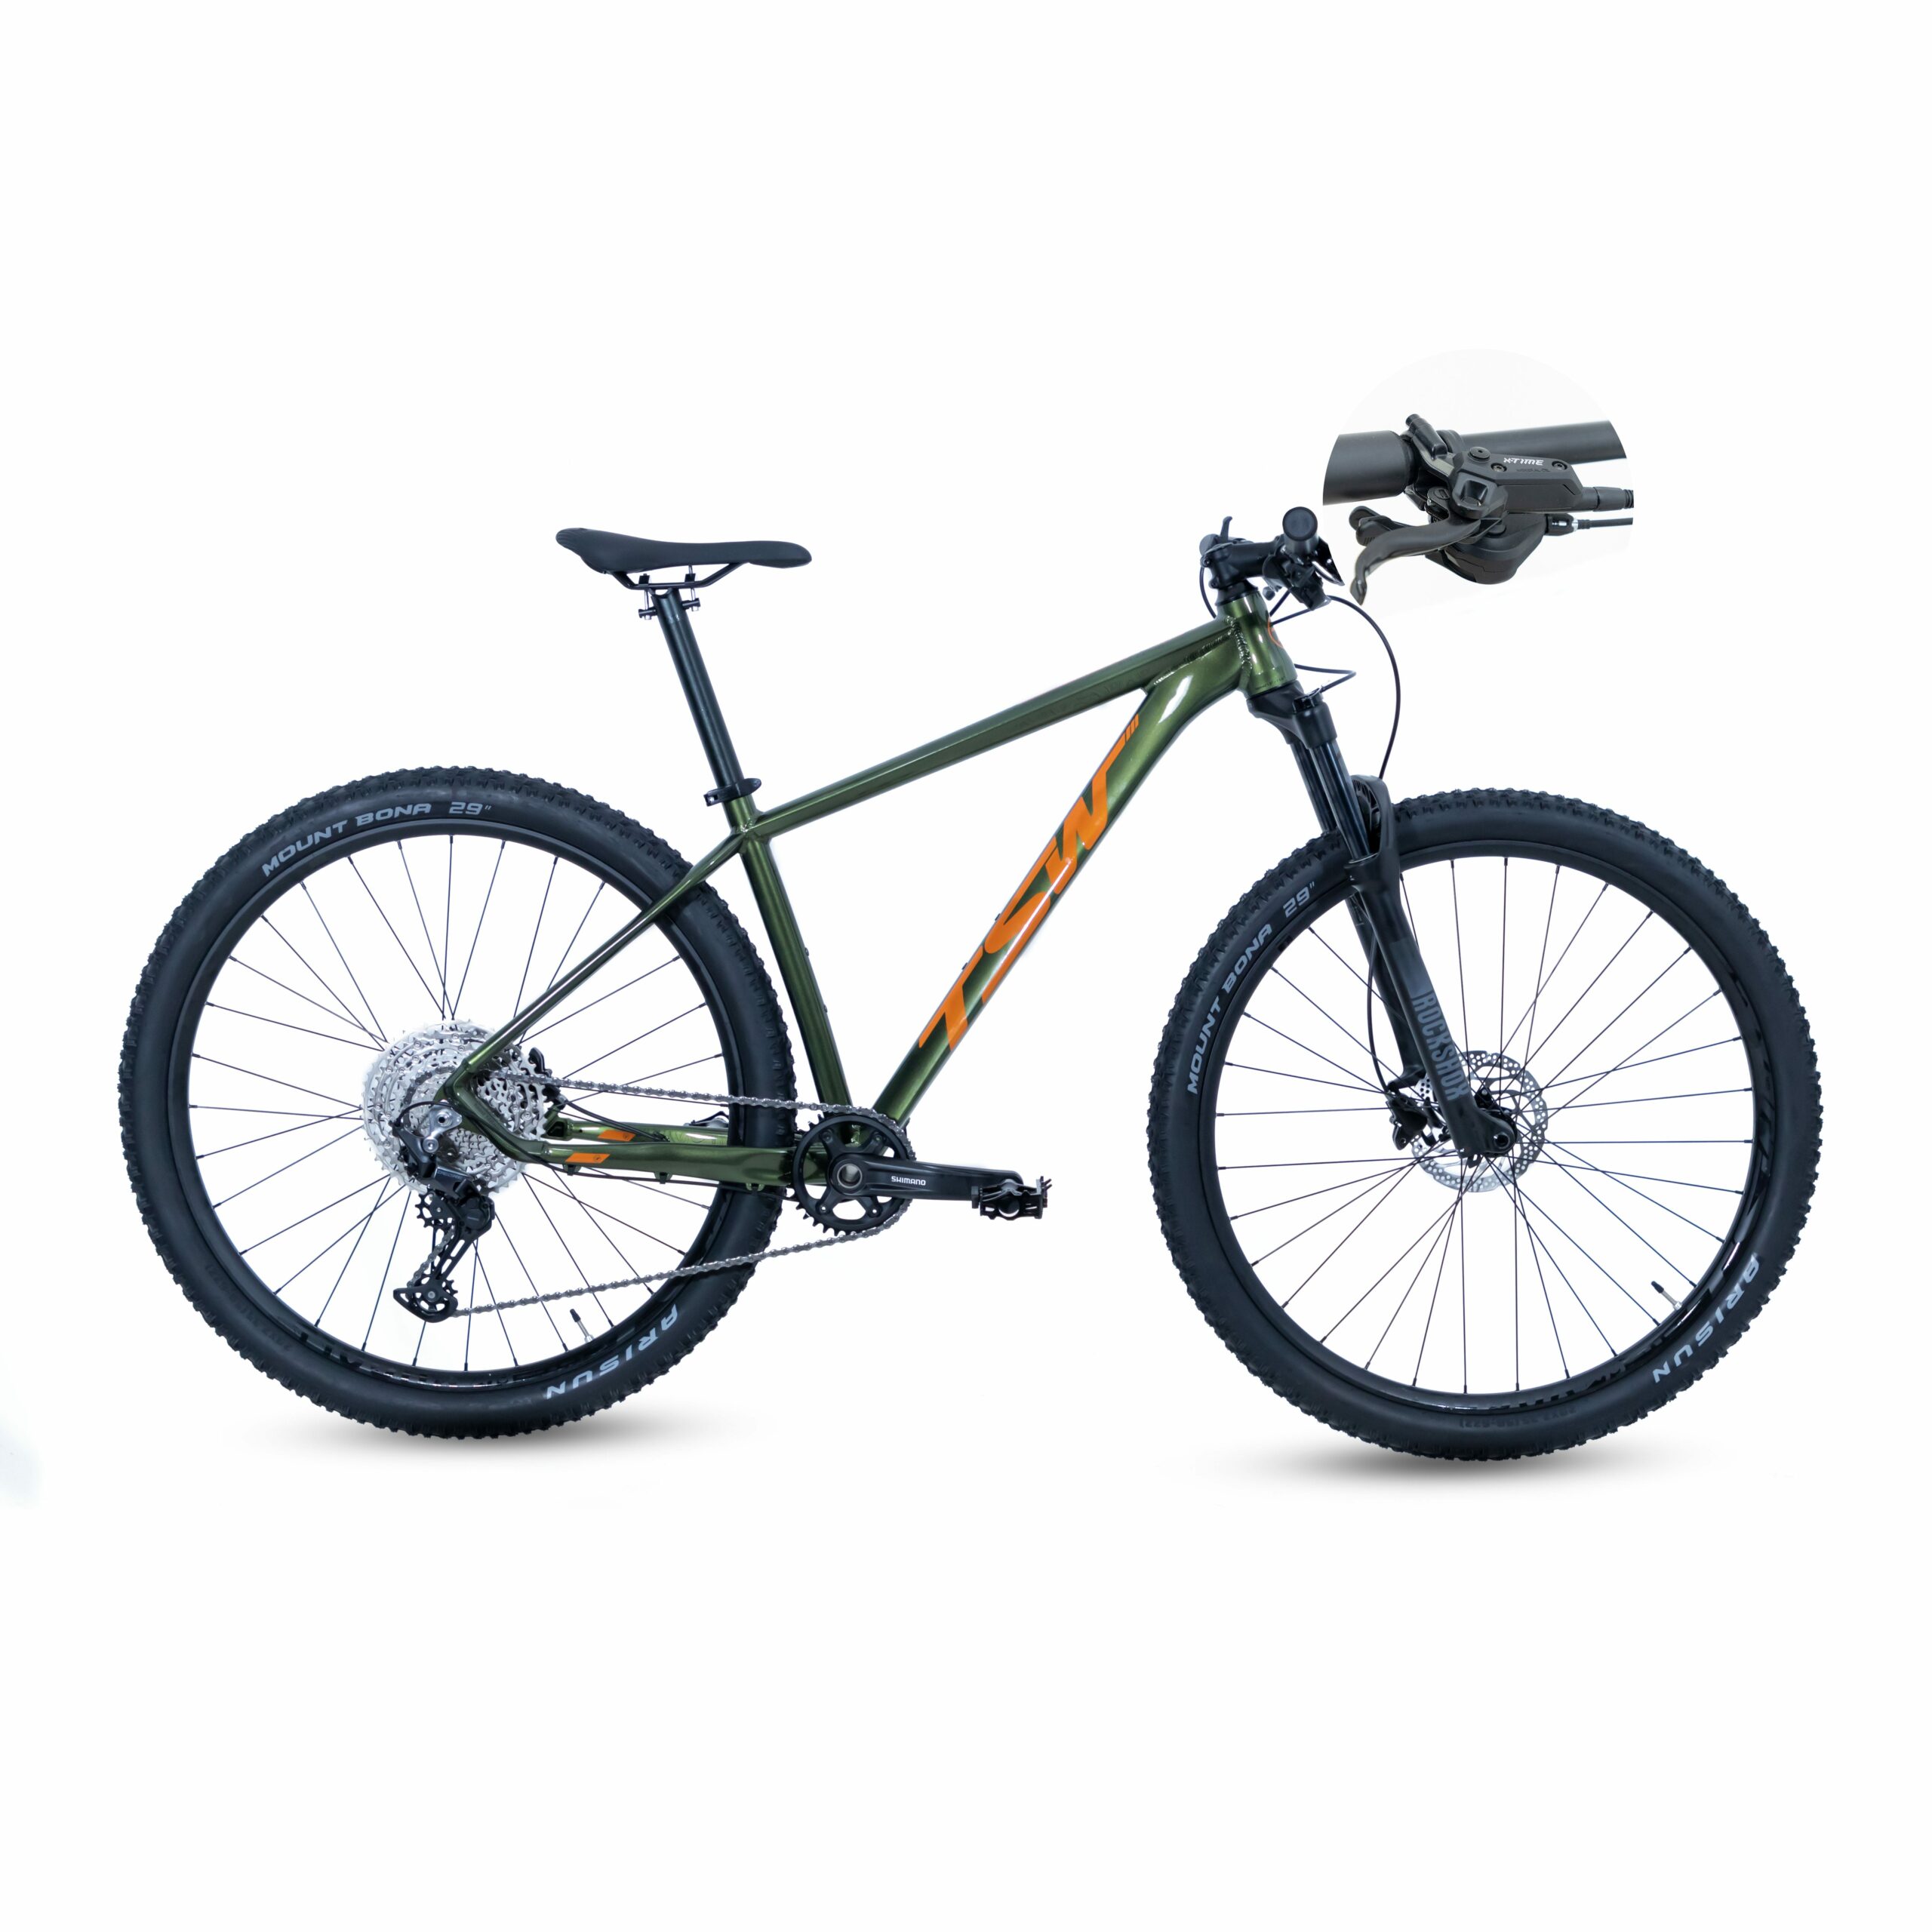 Bicicleta TSW Yukon - Freio X-Time | SH-12 | 2021/2022 - 19", Verde/Laranja